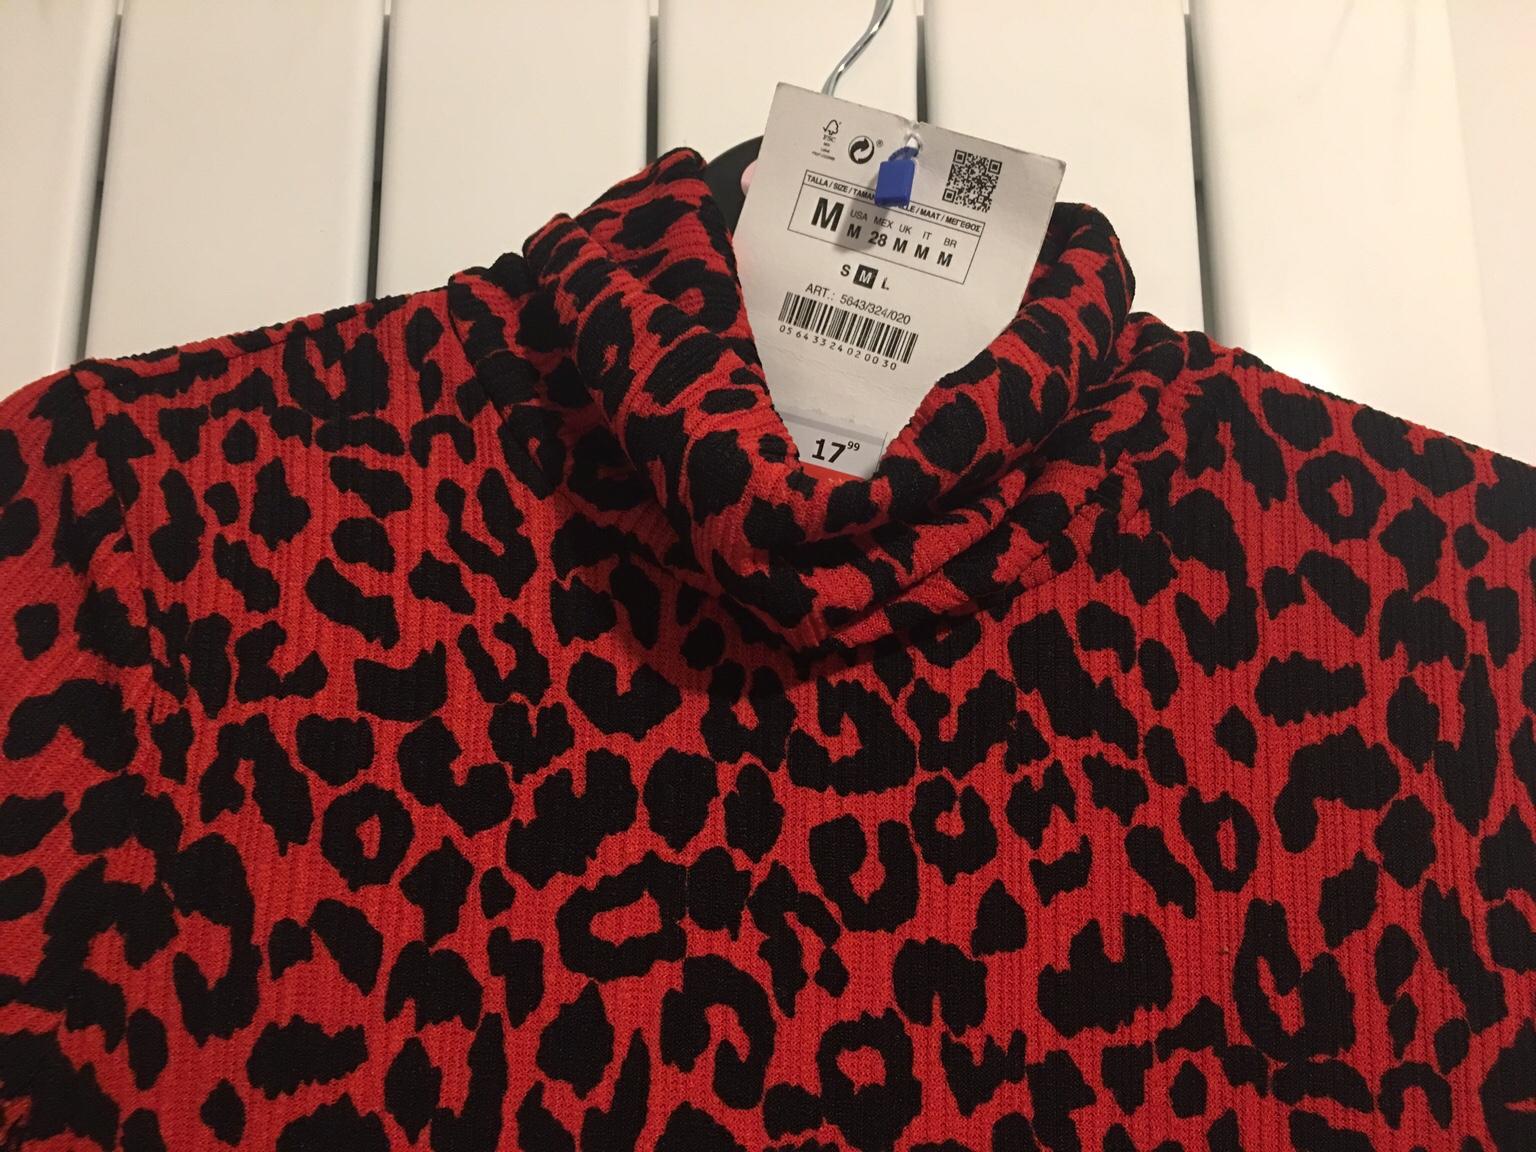 red and black cheetah print dress